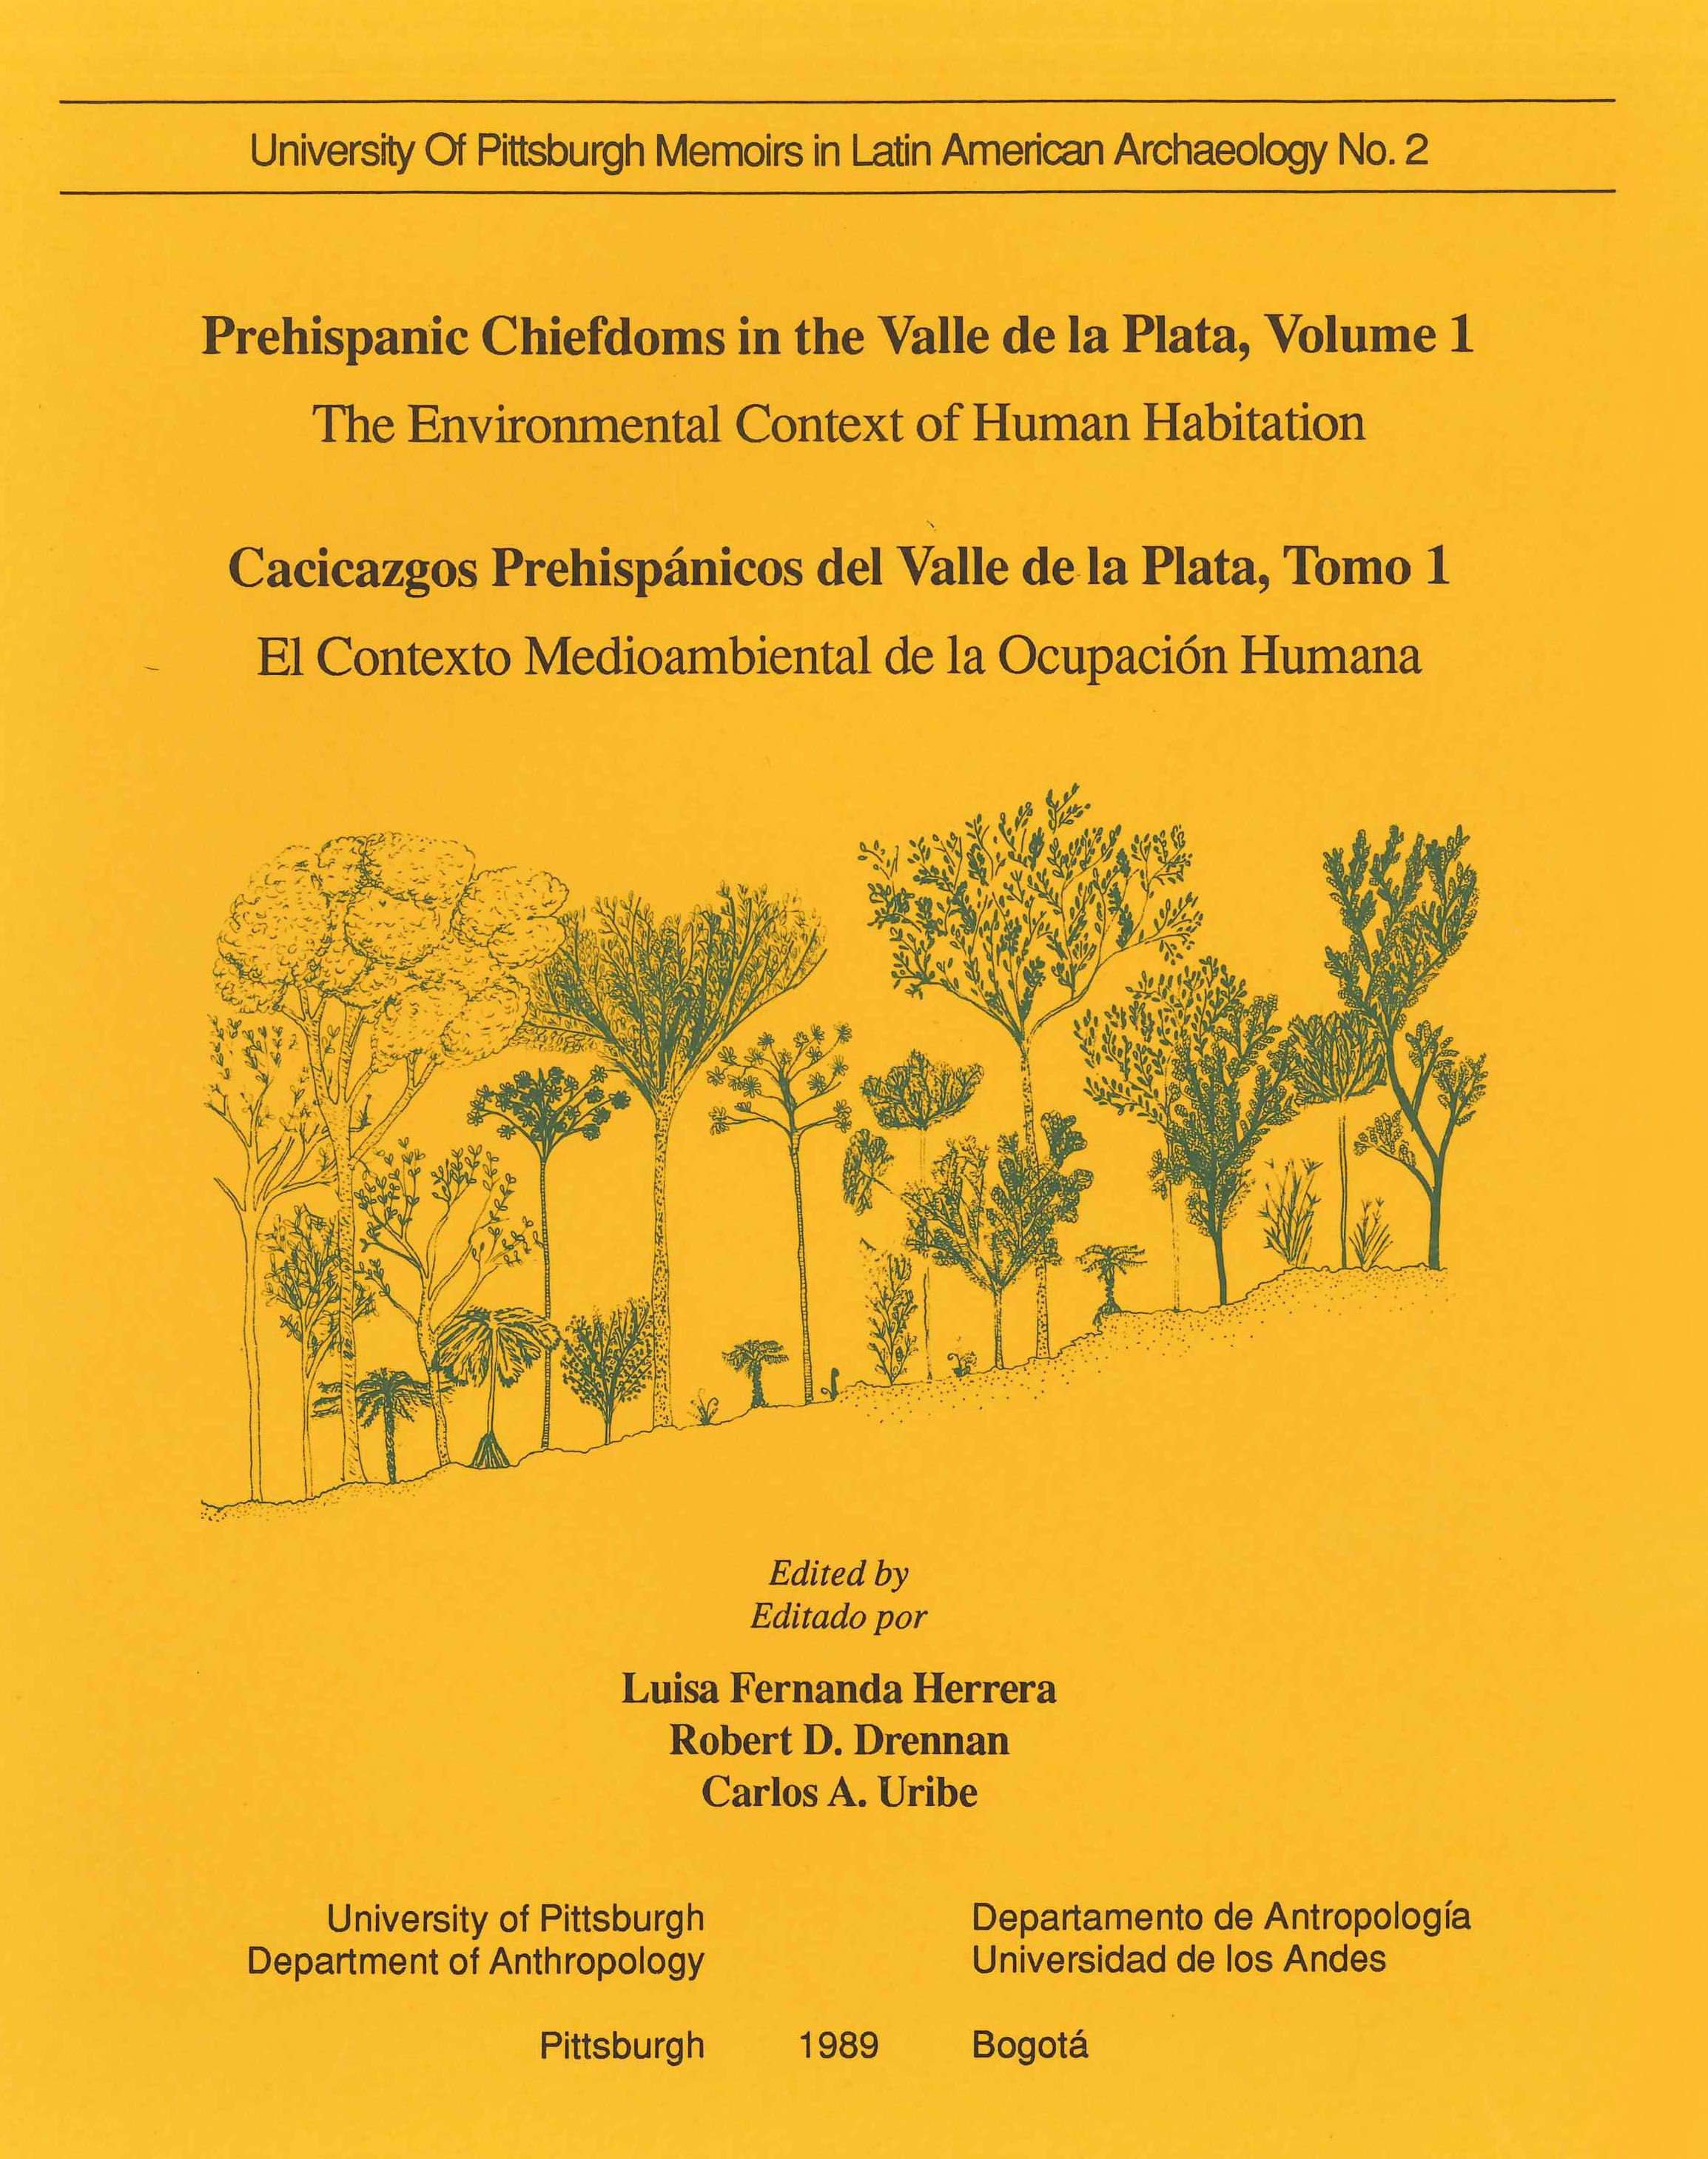 La Plata Chiefdoms, volume 1, cover